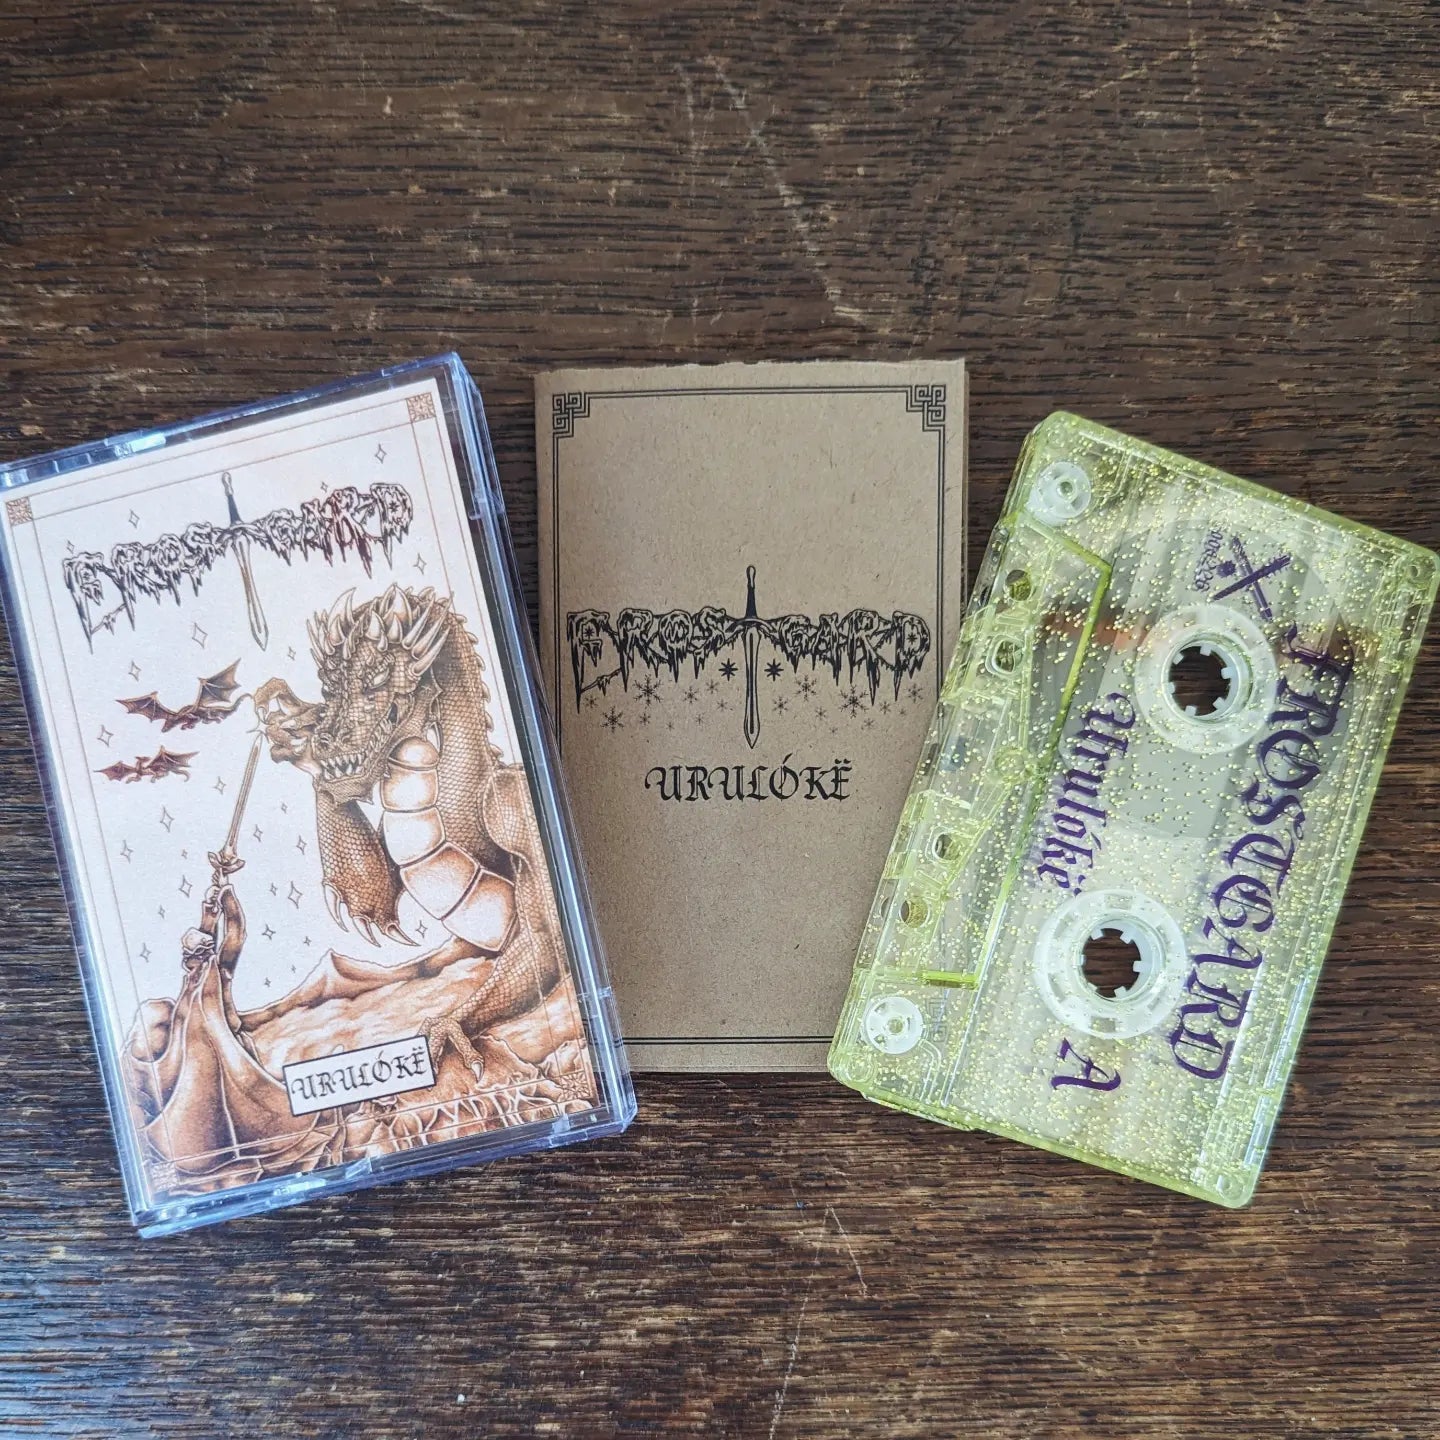 FROSTGARD "Urulókë" cassette tape (lim.200 with booklet/mini-poster)